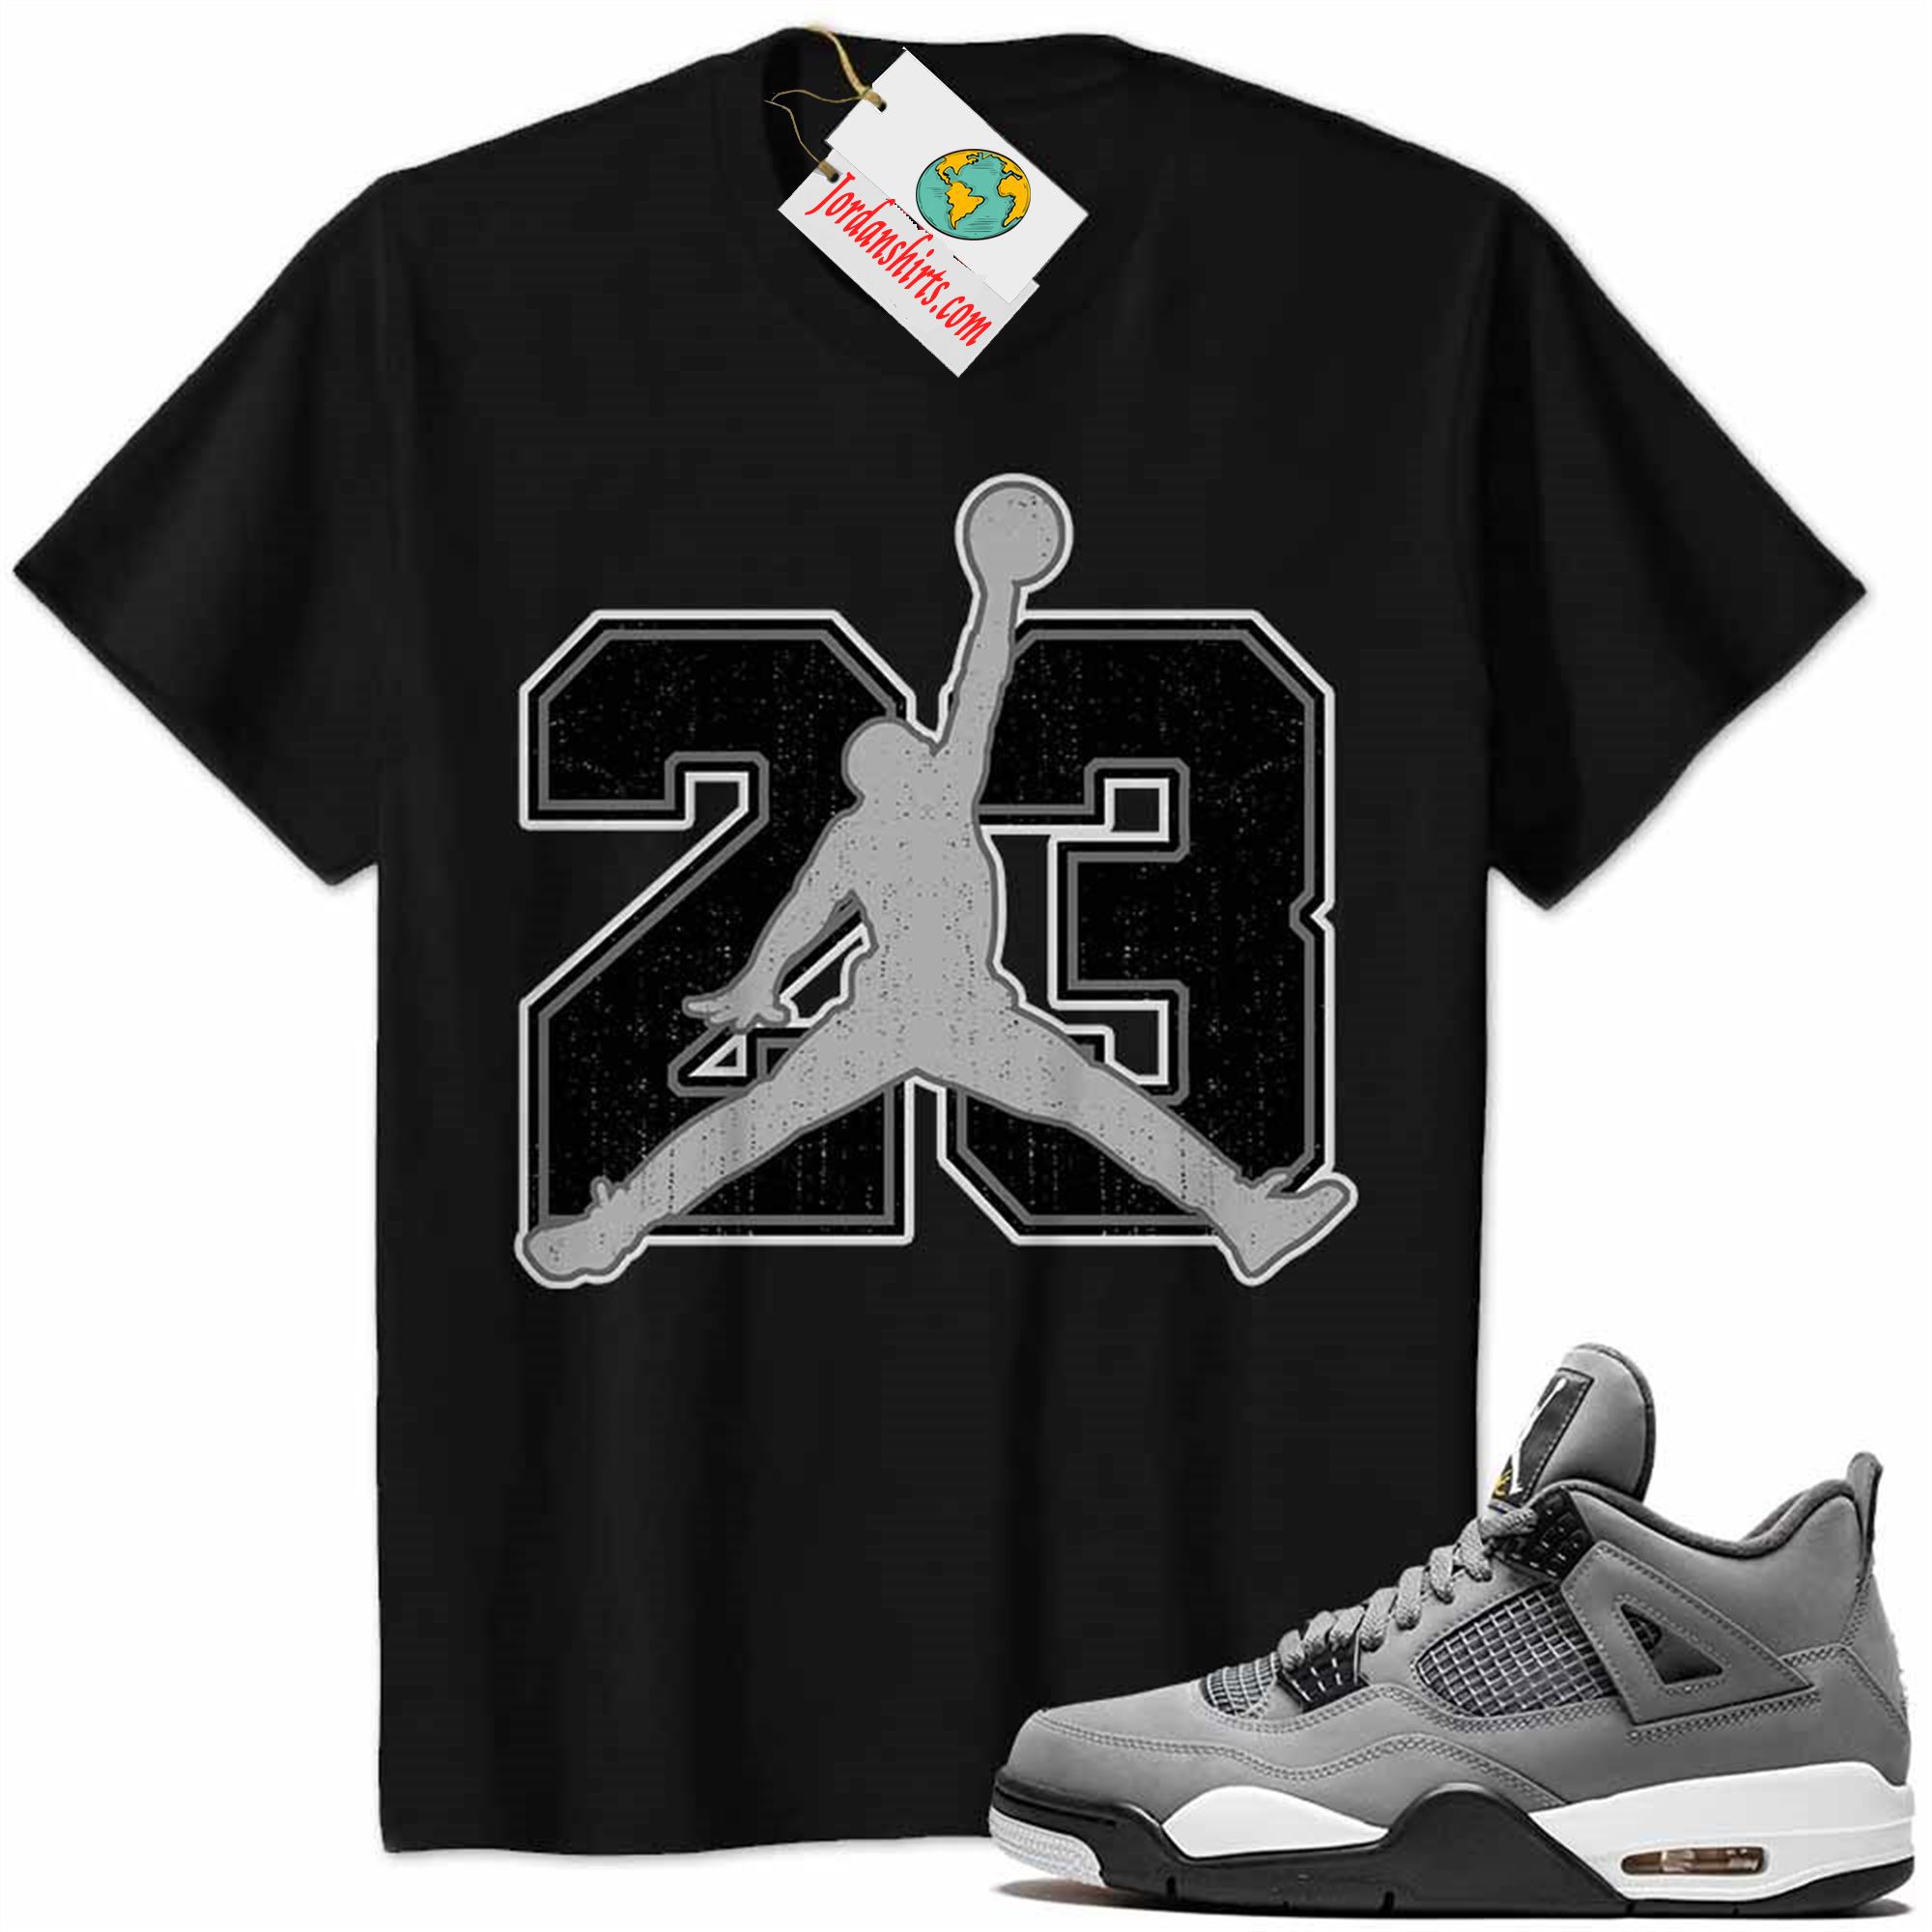 Jordan 4 Shirt, Jordan 4 Cool Grey Shirt Jumpman No23 Black Full Size Up To 5xl